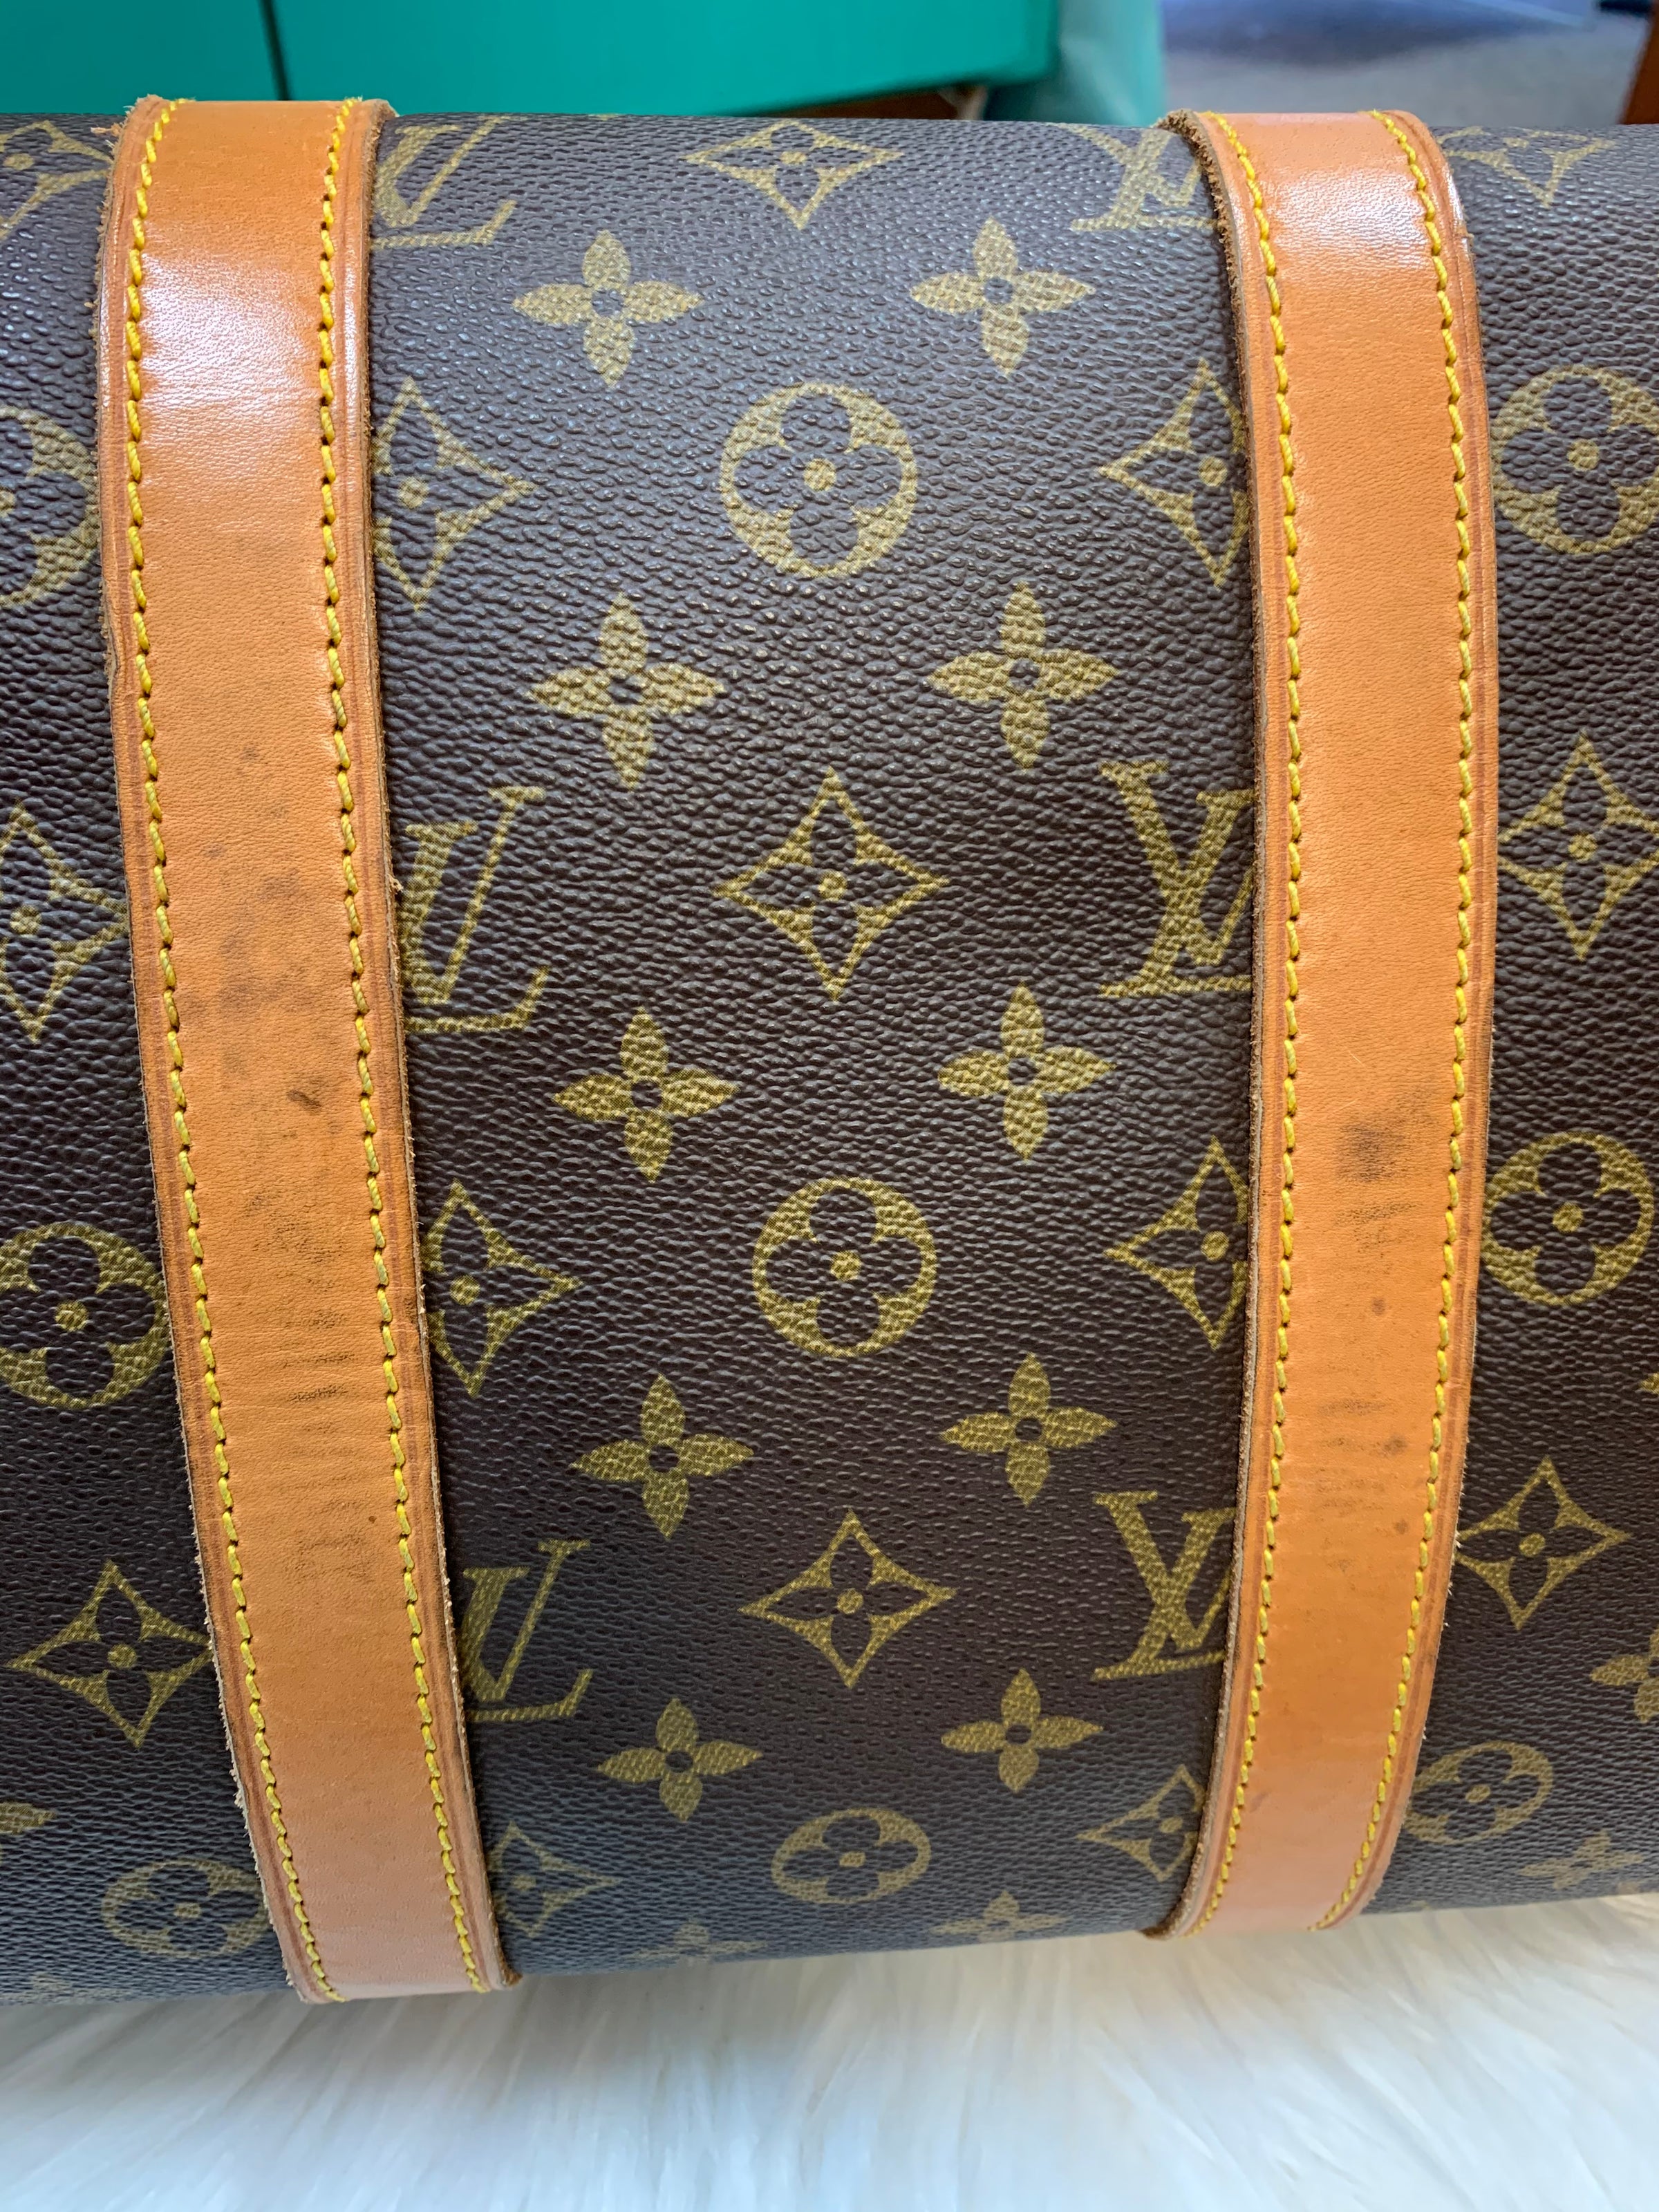 Pre-Owned Louis Vuitton Keepall Monogram 45 Travel Bag - Pristine